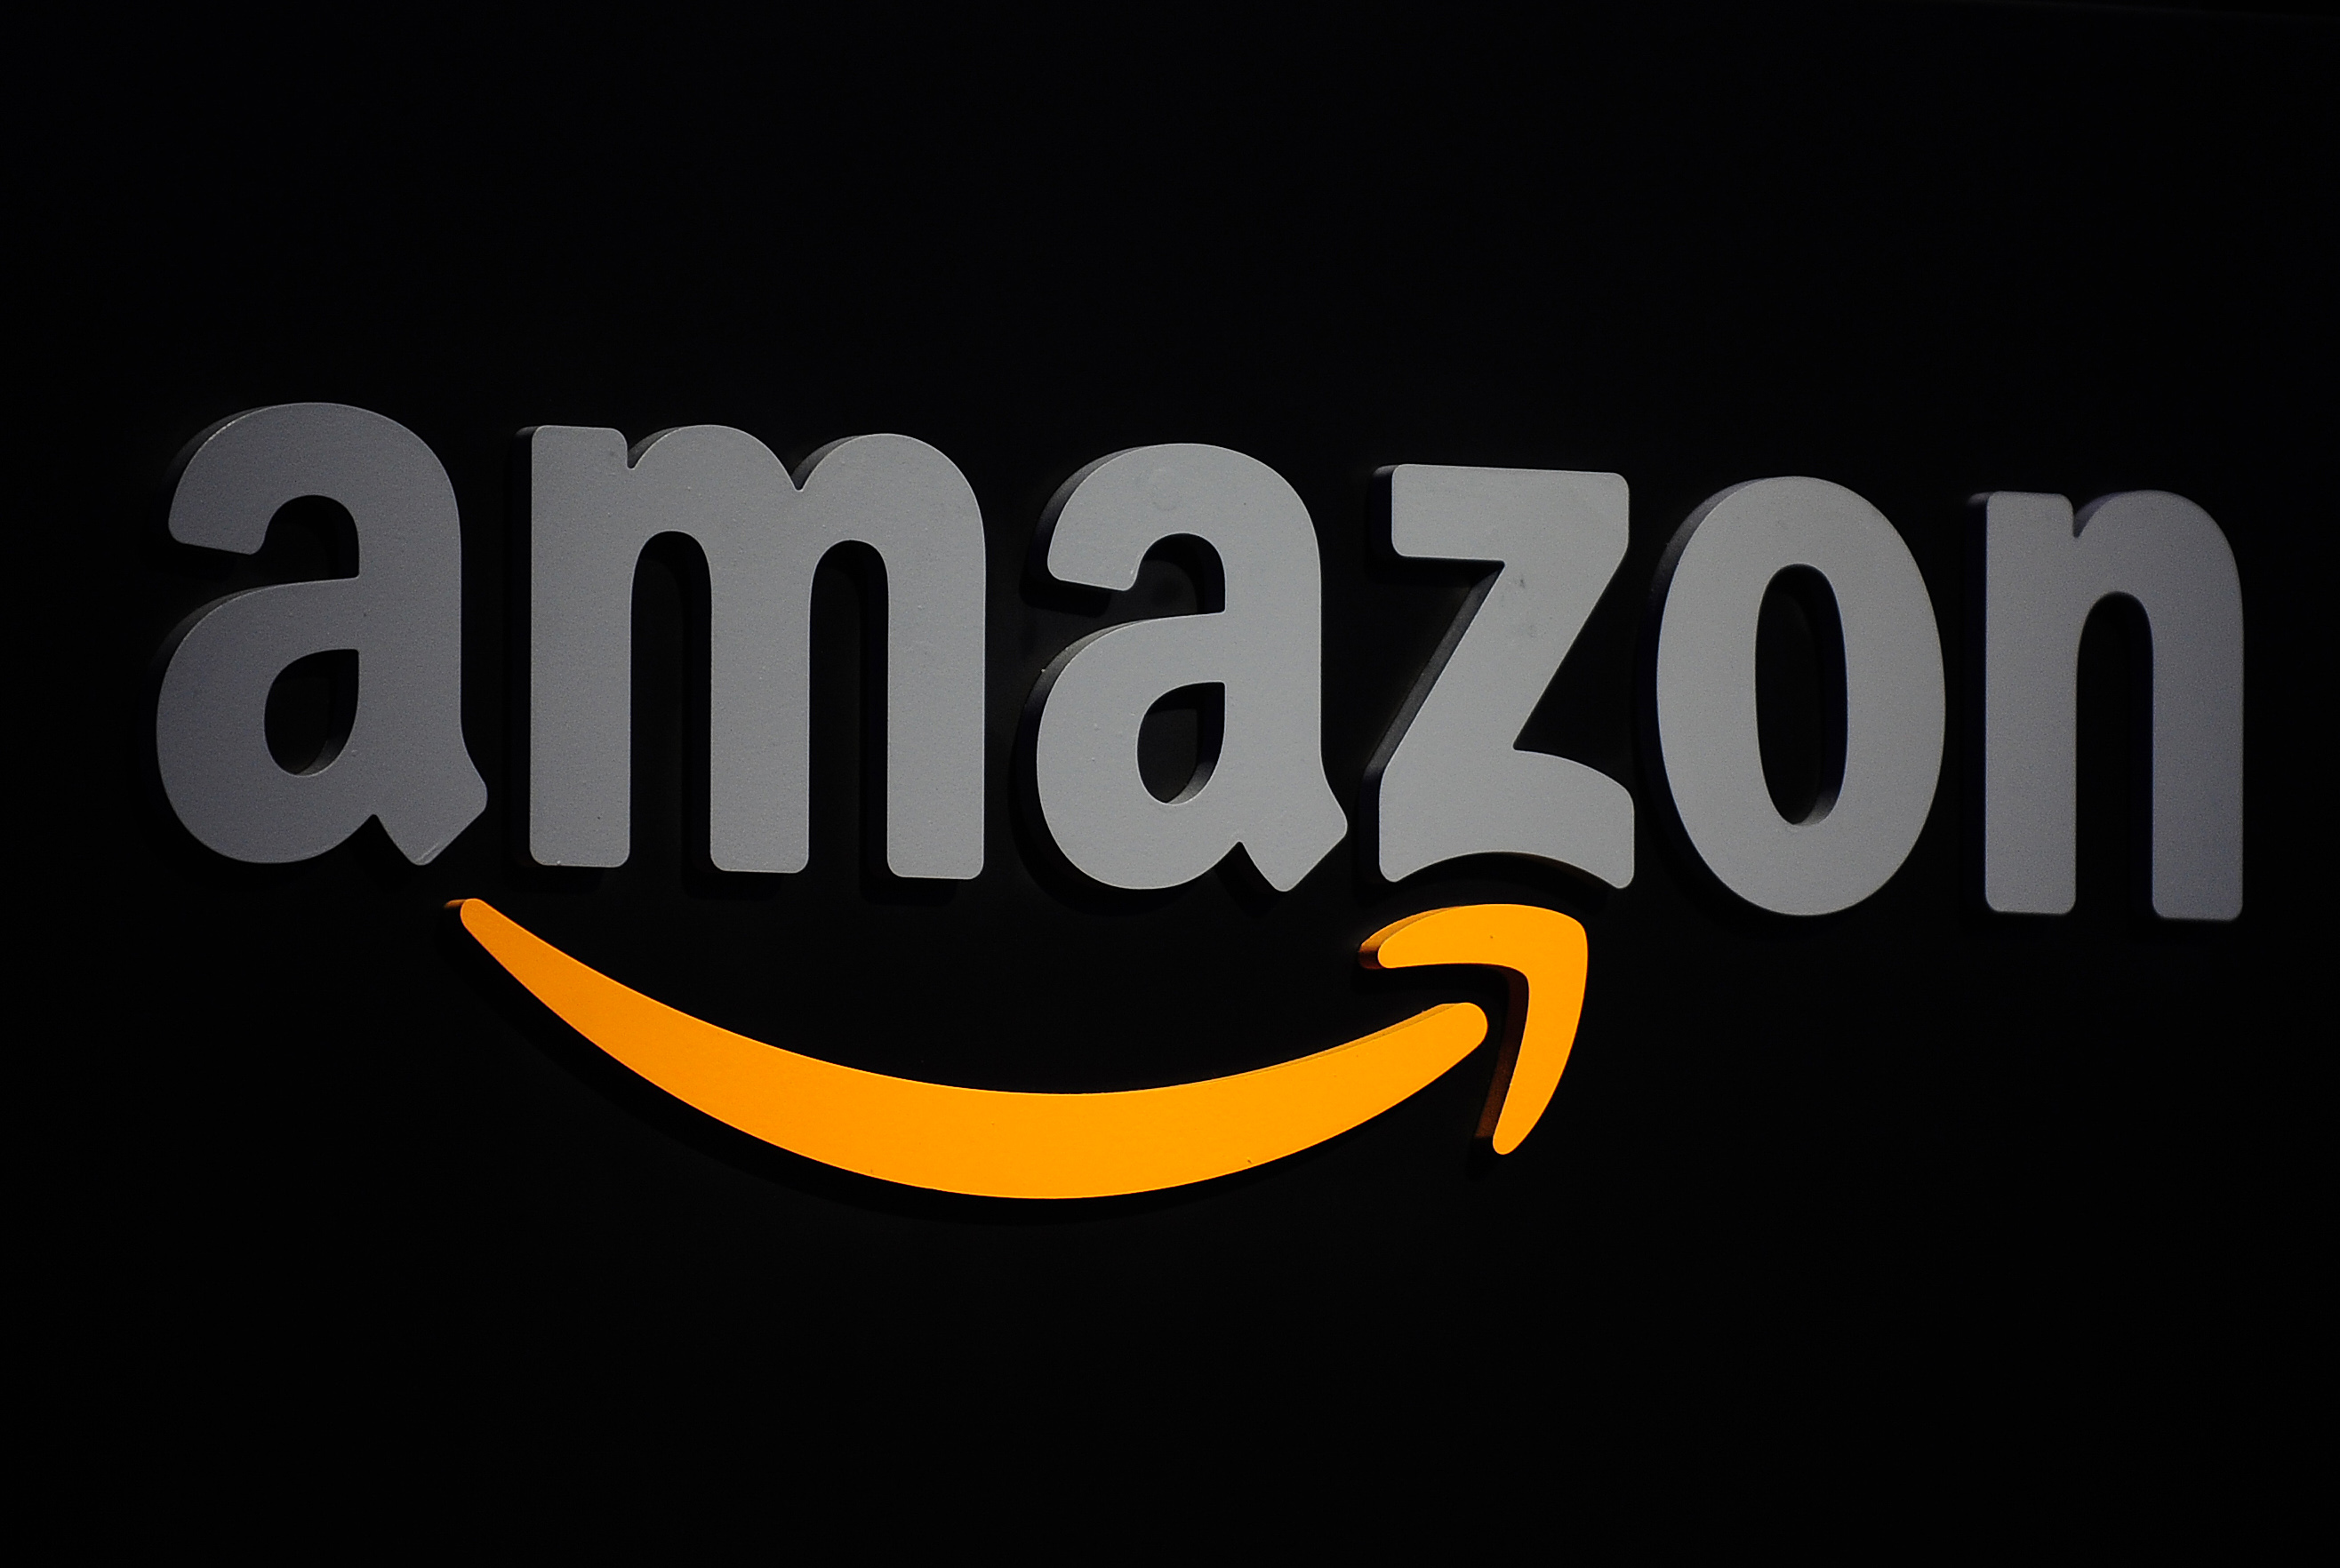 Make Money Online Using Amazon?